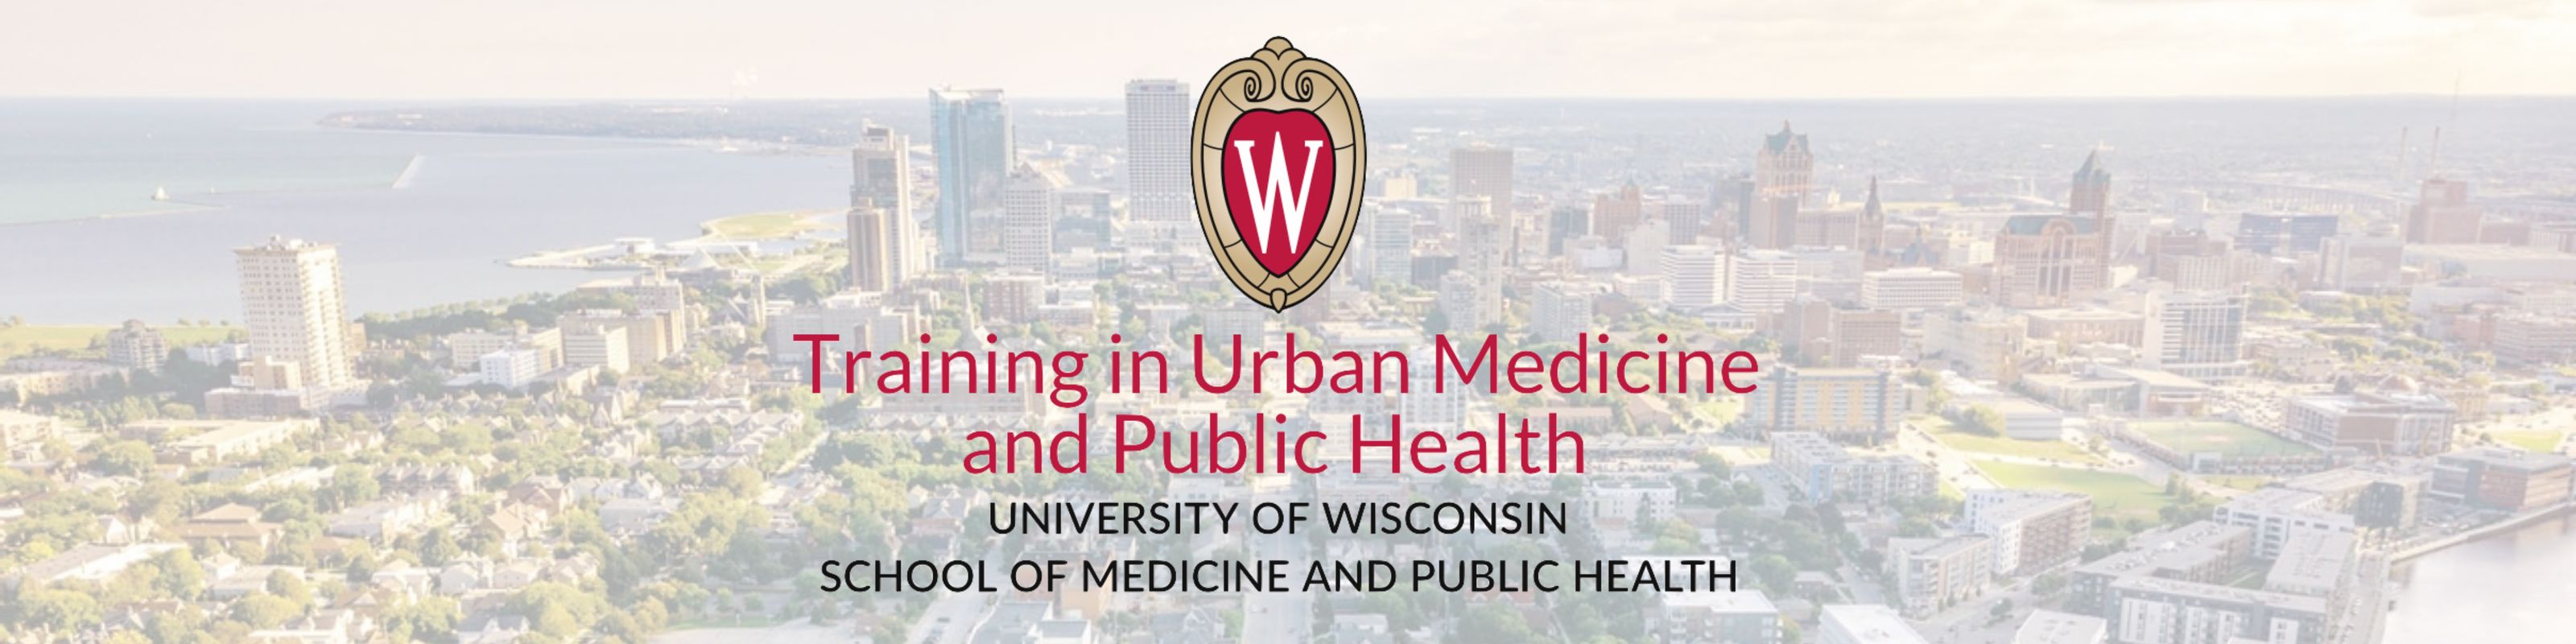 Training in Urban Medicine and Public Health (TRIUMPH) - Community Book